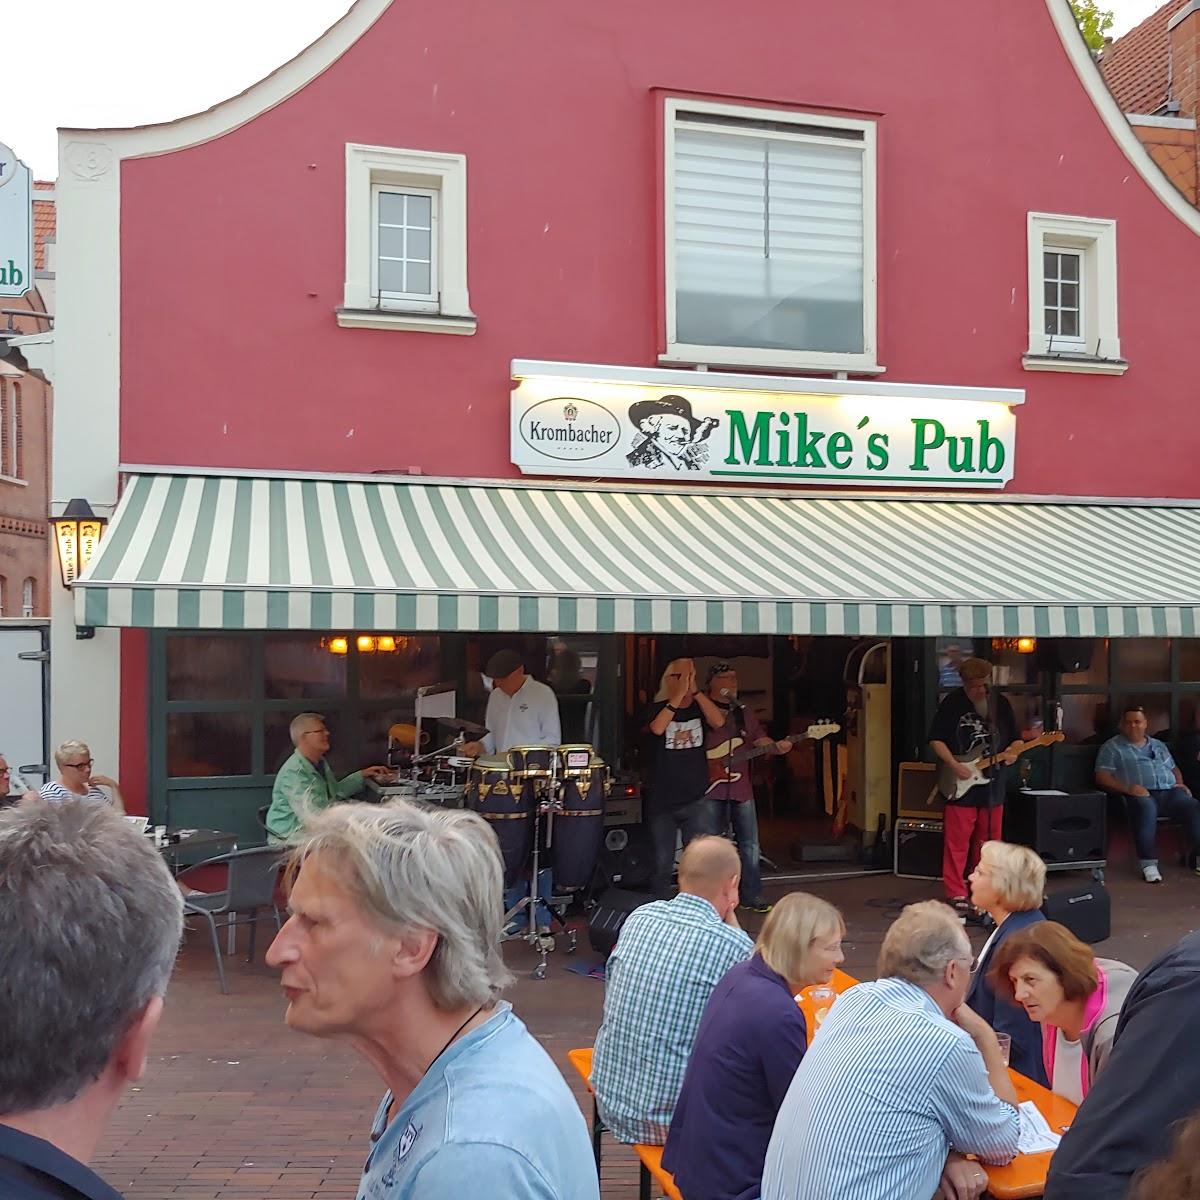 Restaurant "Mikes Pub" in Meppen